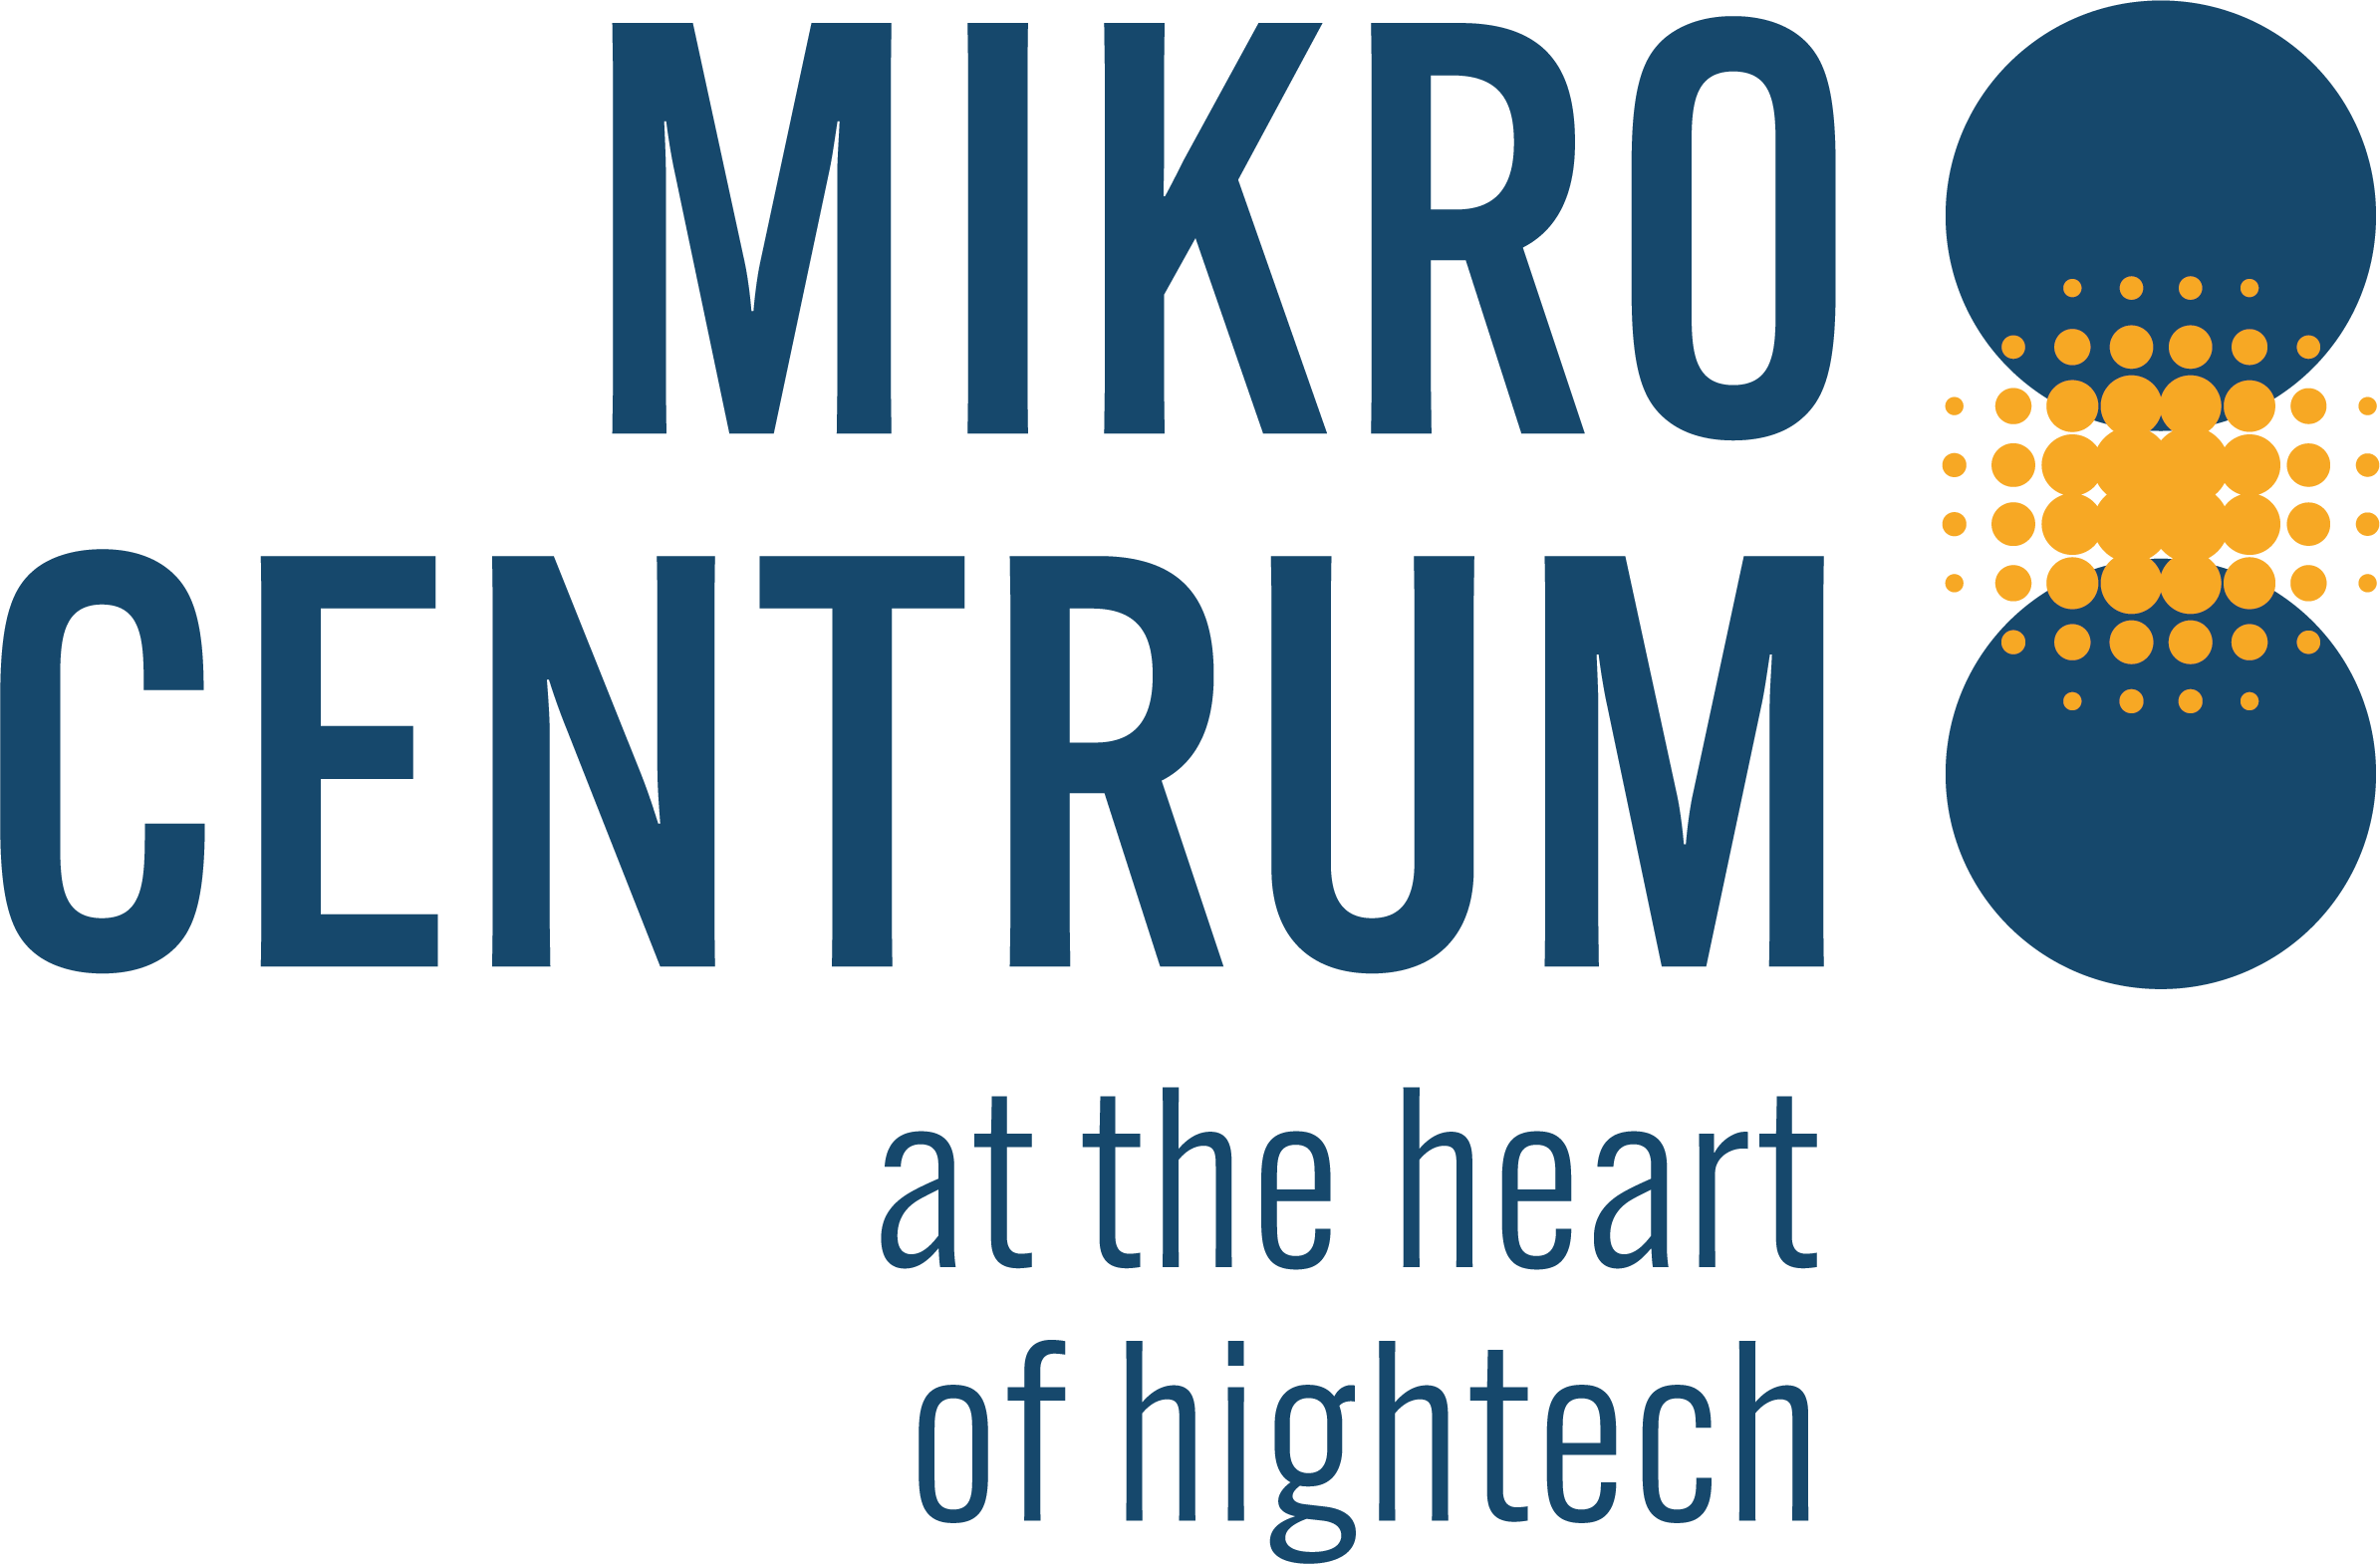 Mikrocentrum CMYK logo DEF